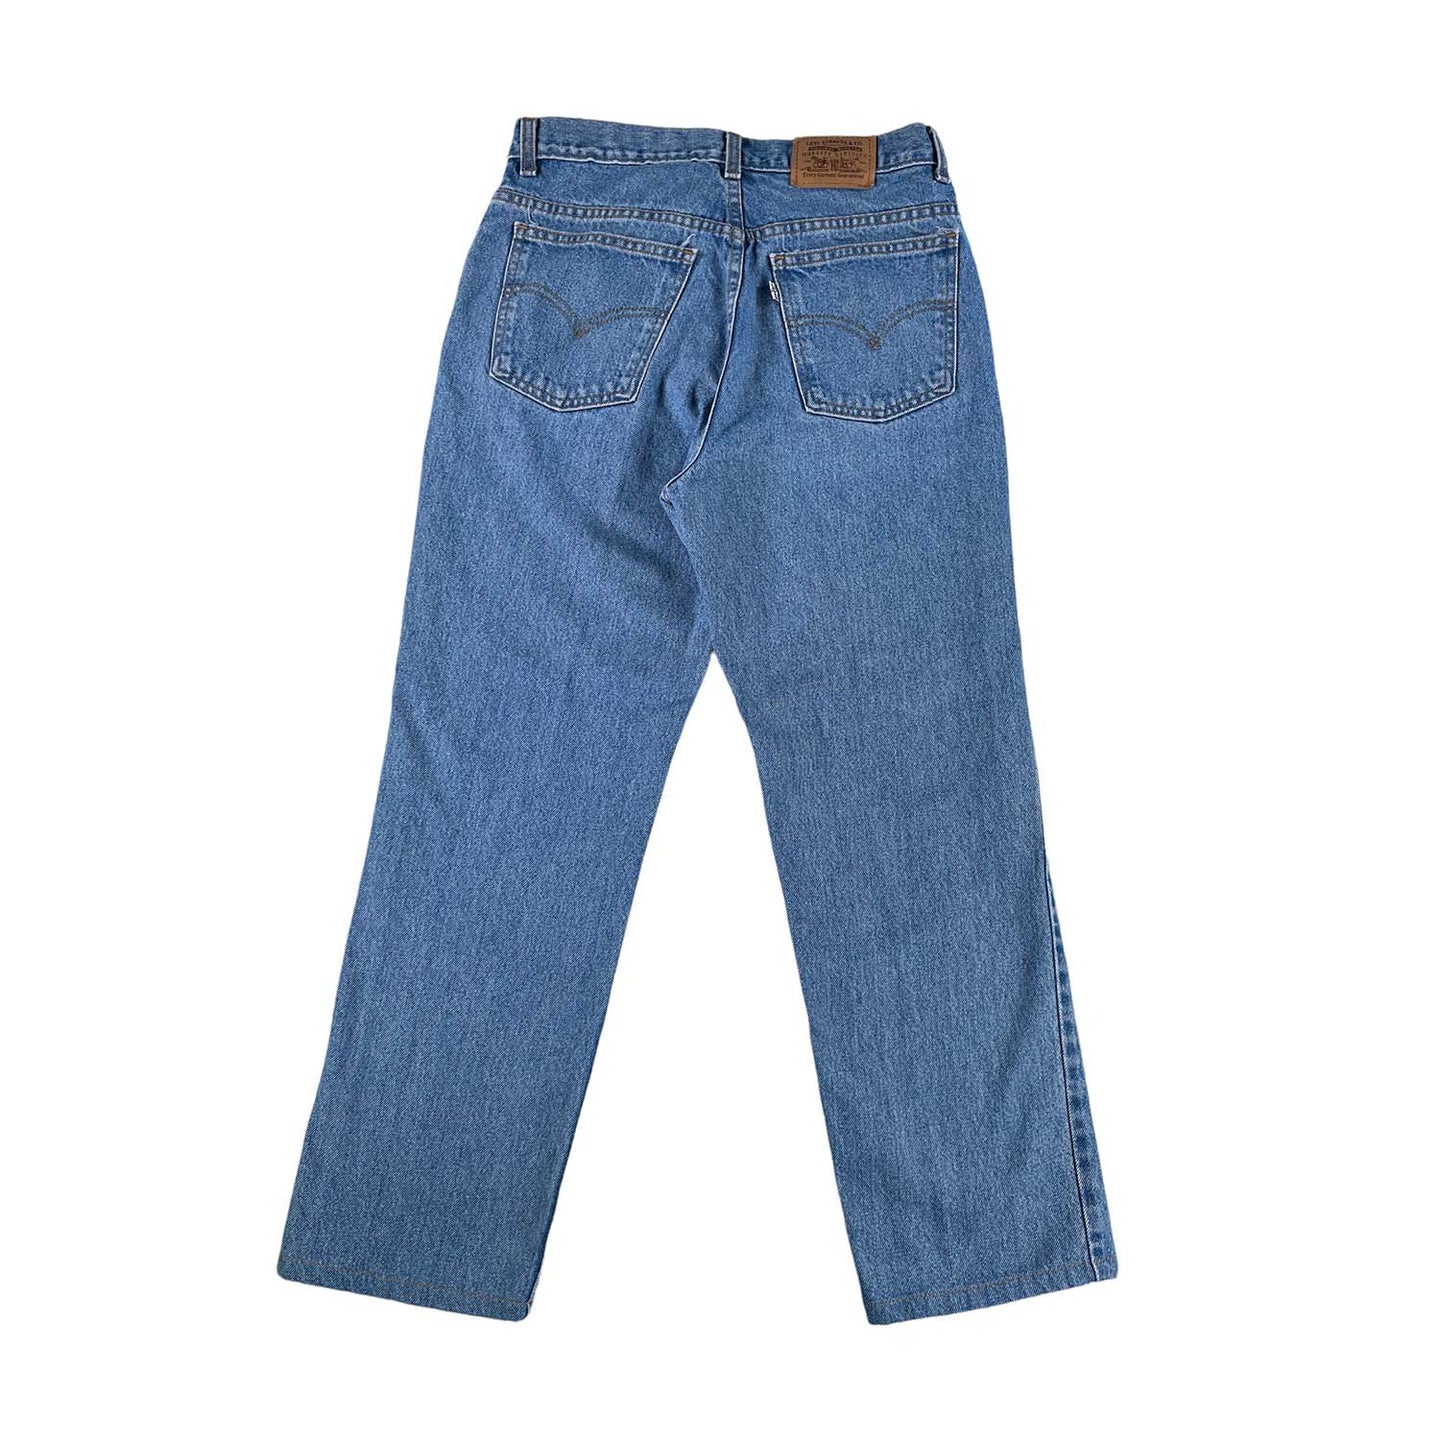 Vintage Levi's white tab jeans 30x28